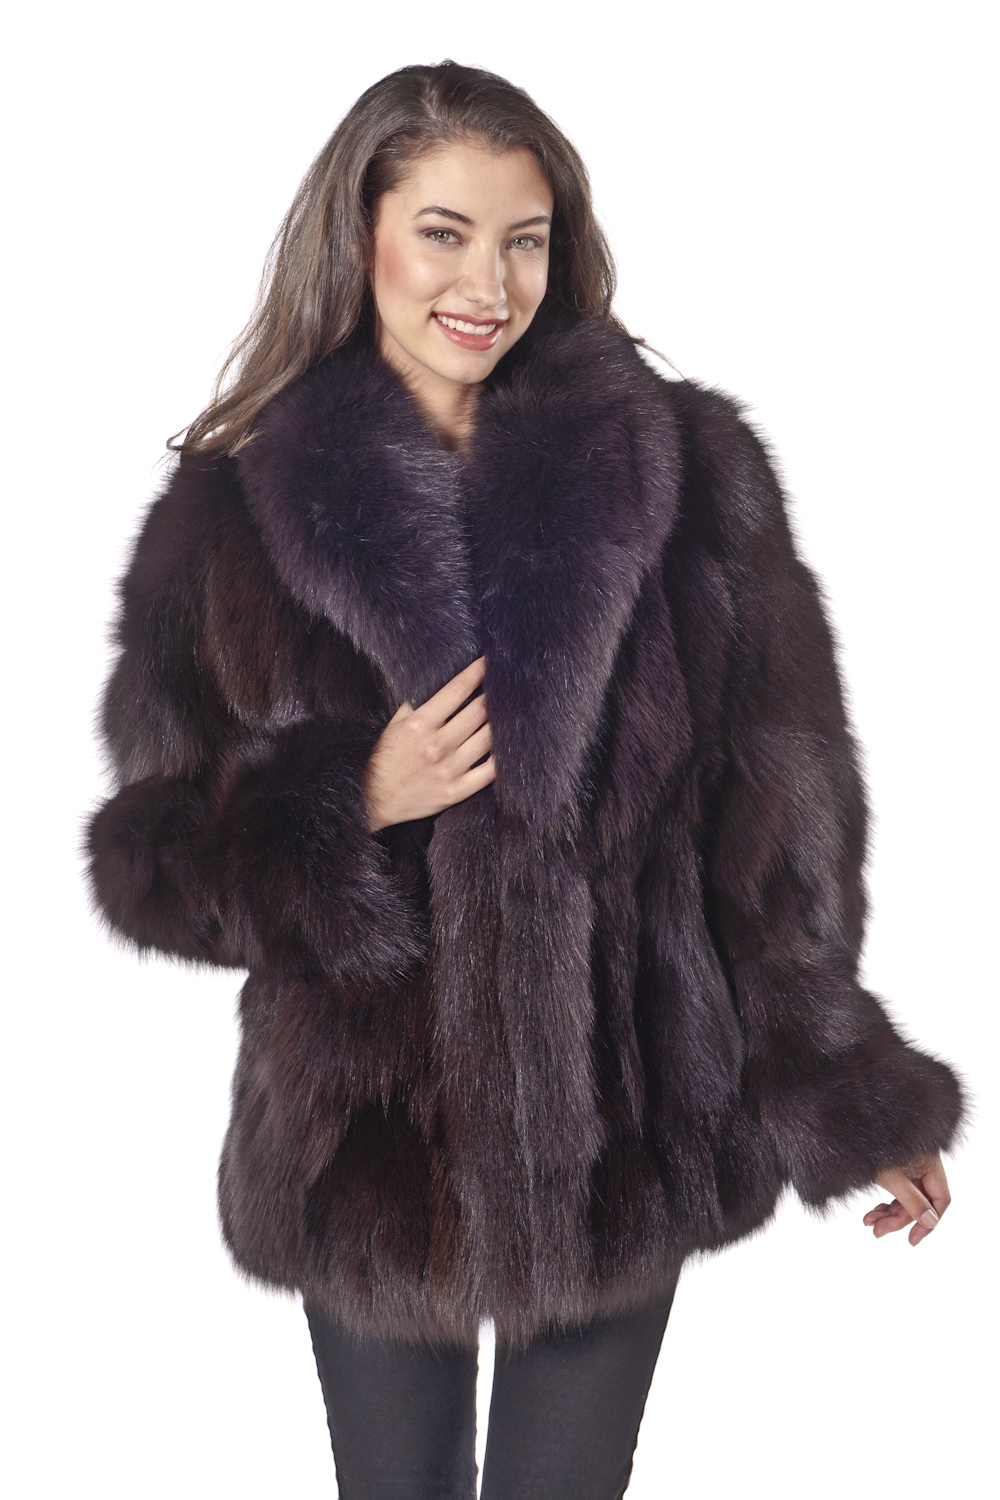 Brown Fox Fur Jacket Plus Size | Madison Avenue Mall Furs